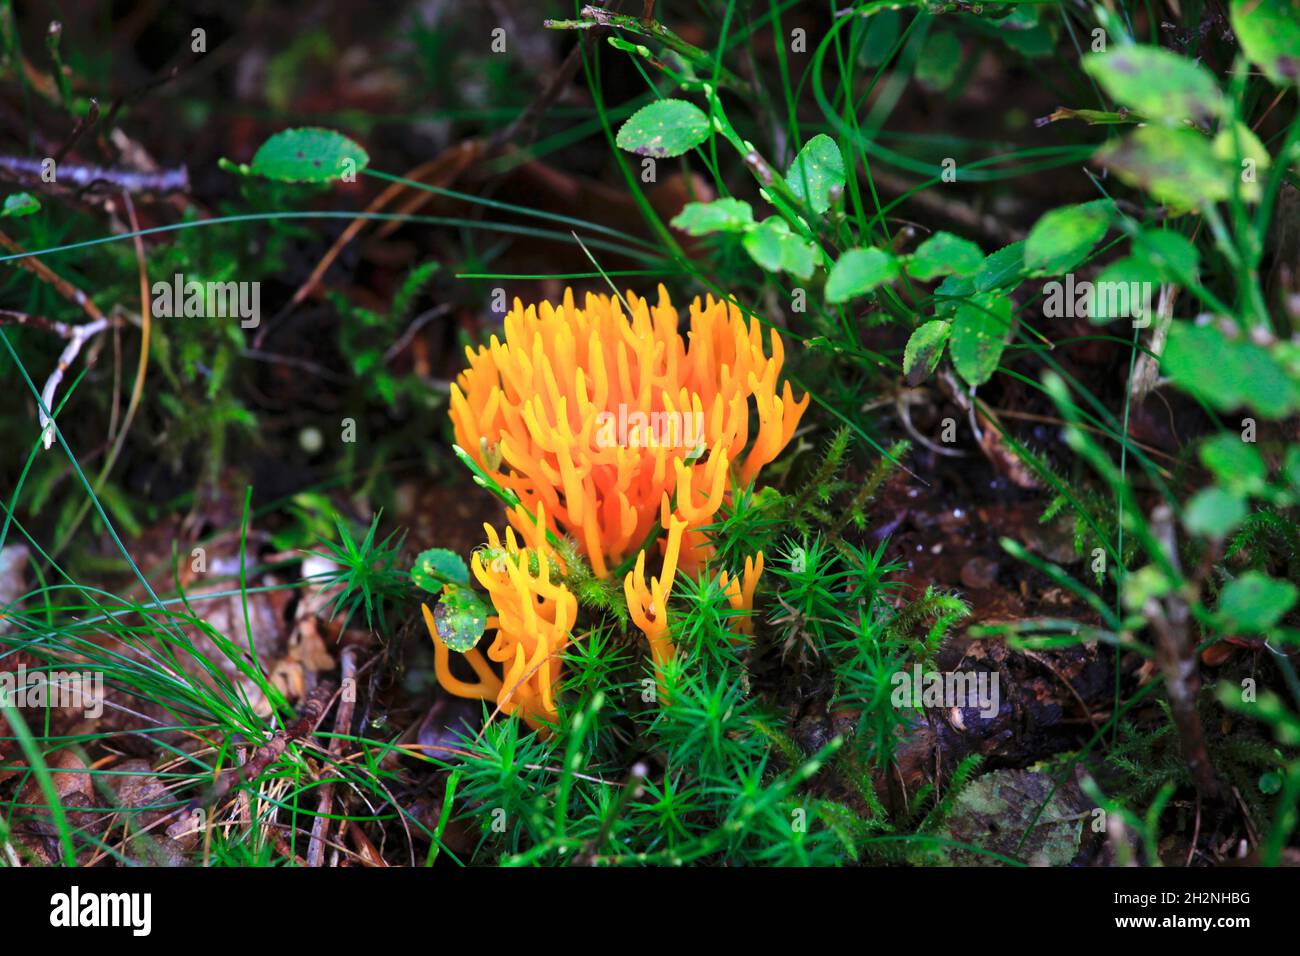 Vibrant yellow mushrooms growing on forest floor Stock Photo